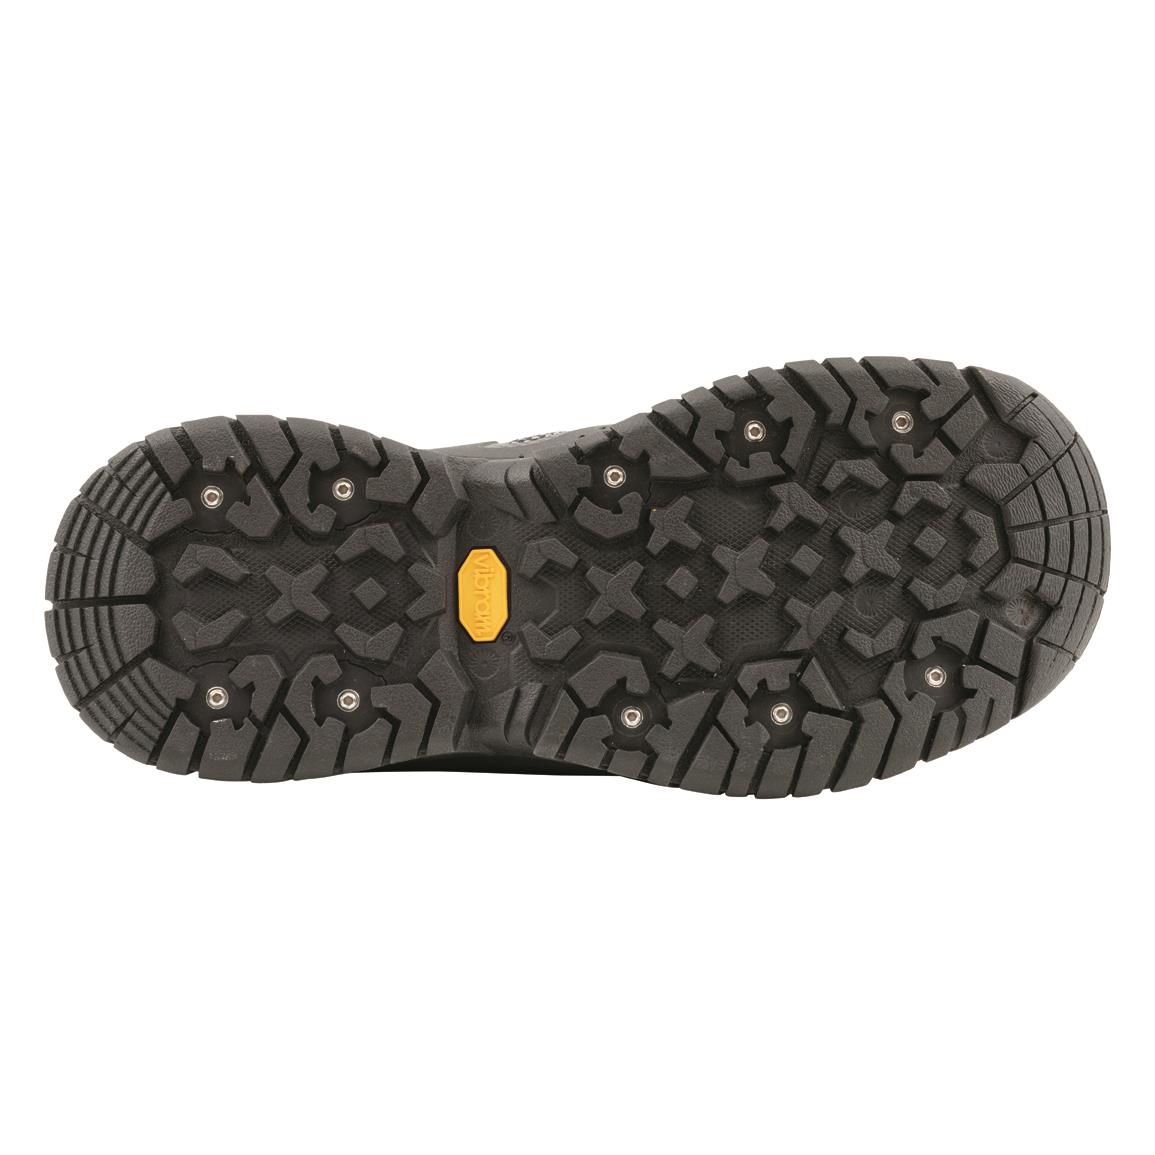 Northside Men's Rockford Waterproof Hiking Shoes - 722029, Hiking Boots ...